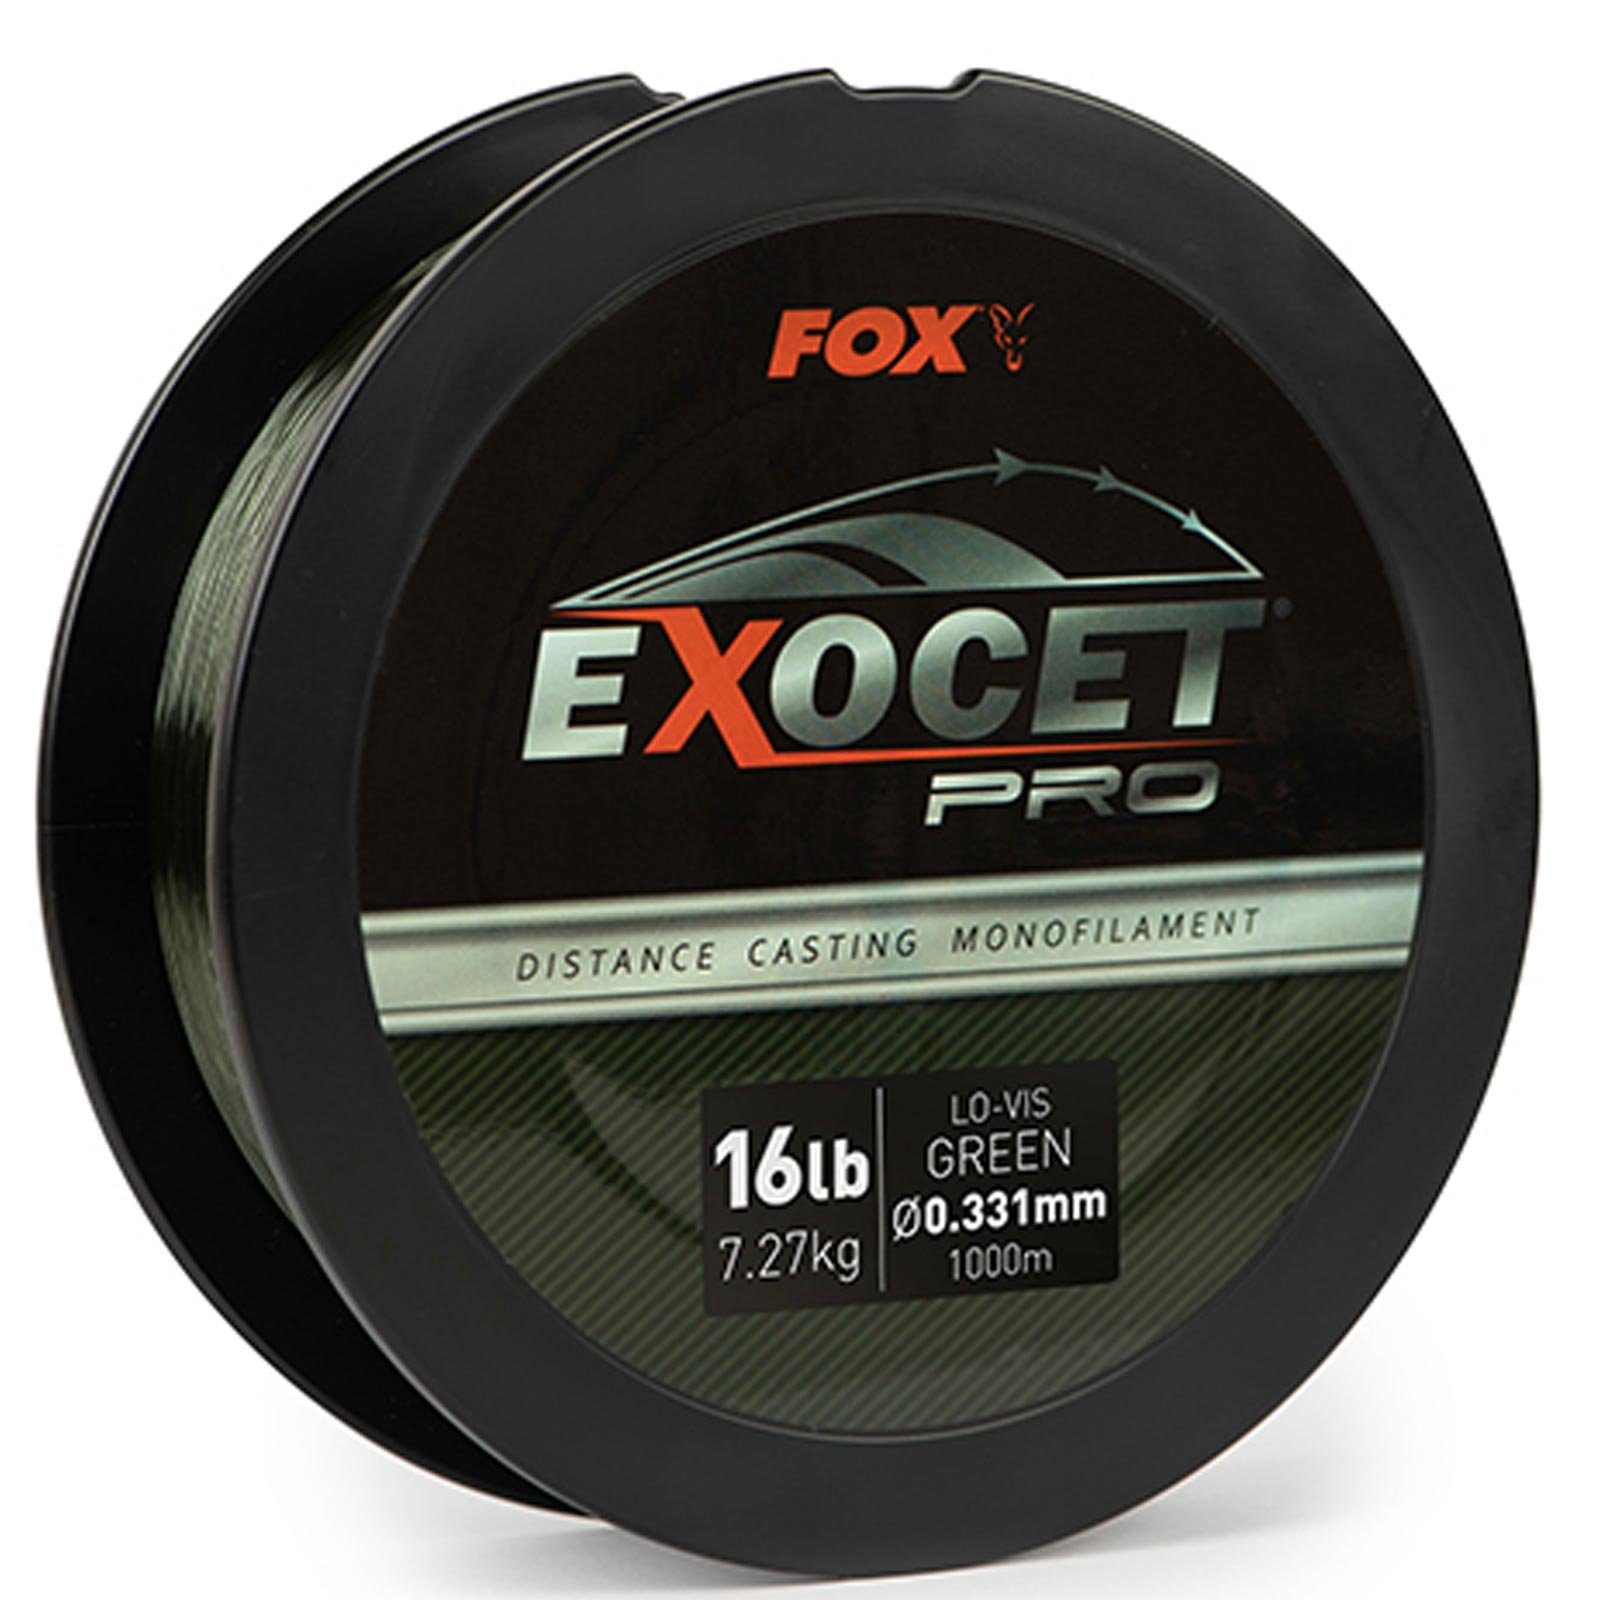 Fox Pro Lo-Vis Fox Angelschnur, Green Exocet 7.27kgs Monofilament Länge, m 1000 / (1000m)Monofile 16lbs Angelschnur 0.331mm